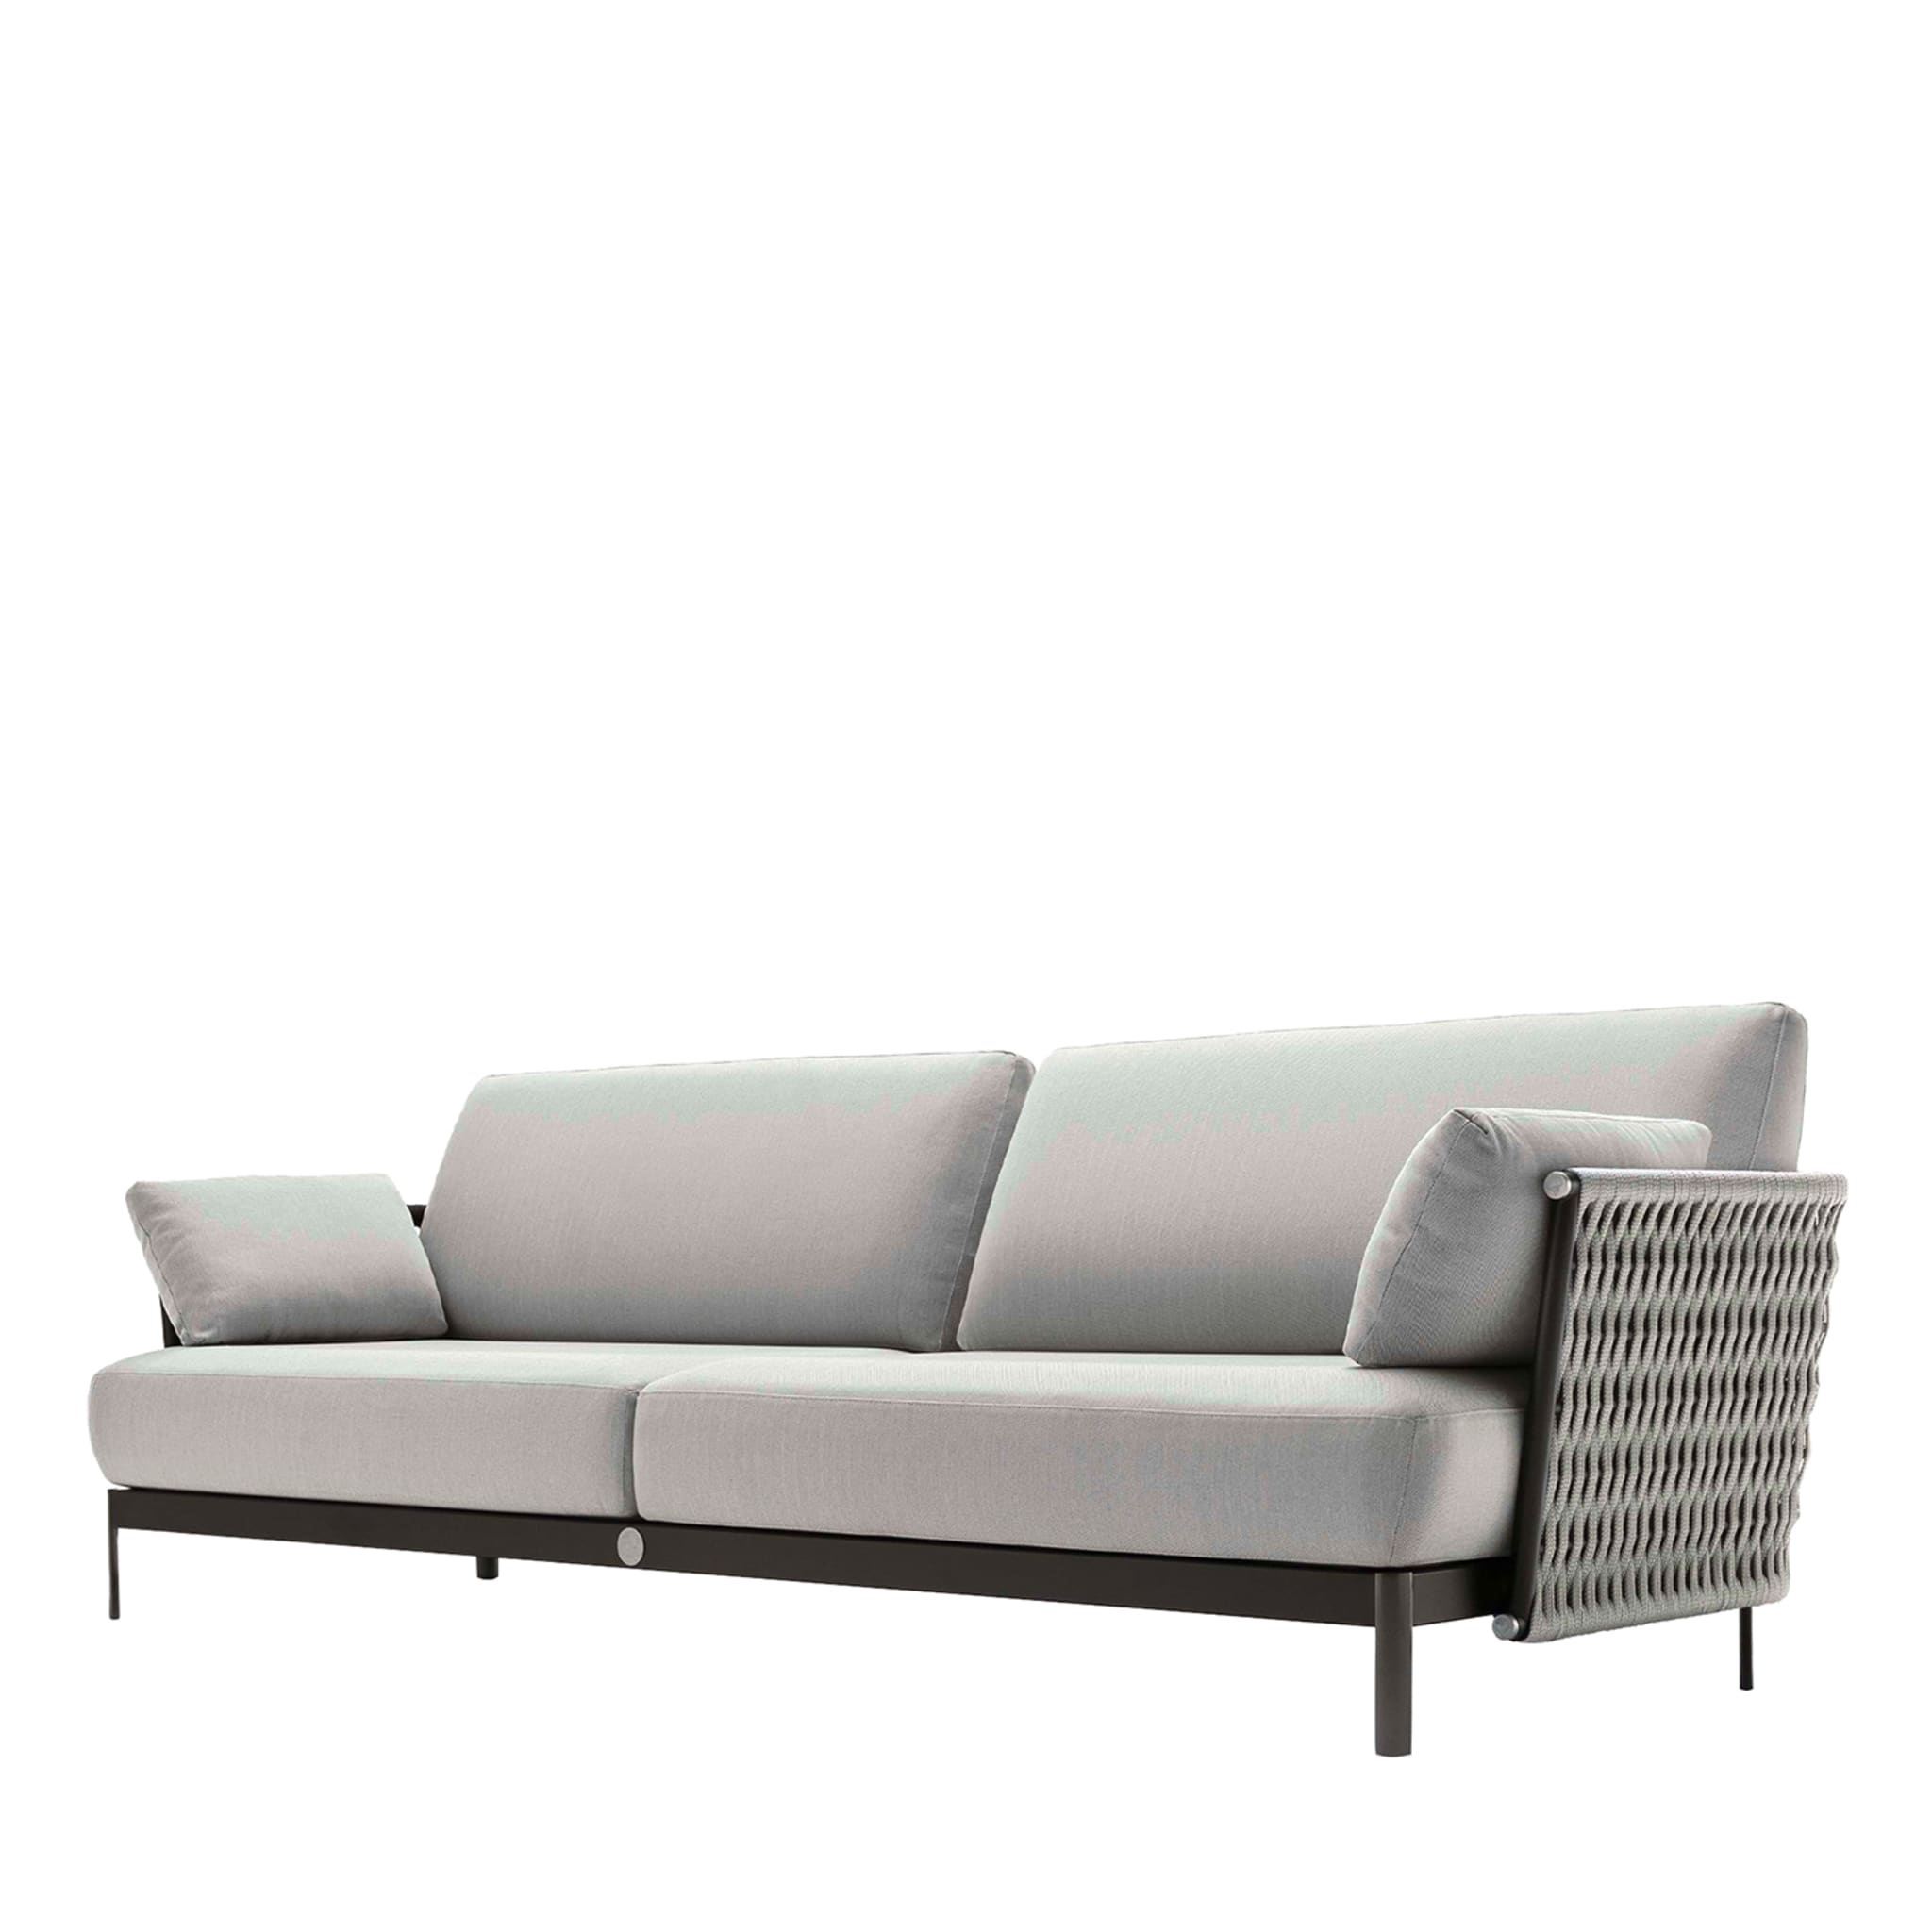 4 Seats Gray Outdoor fabric Sofa - Main view